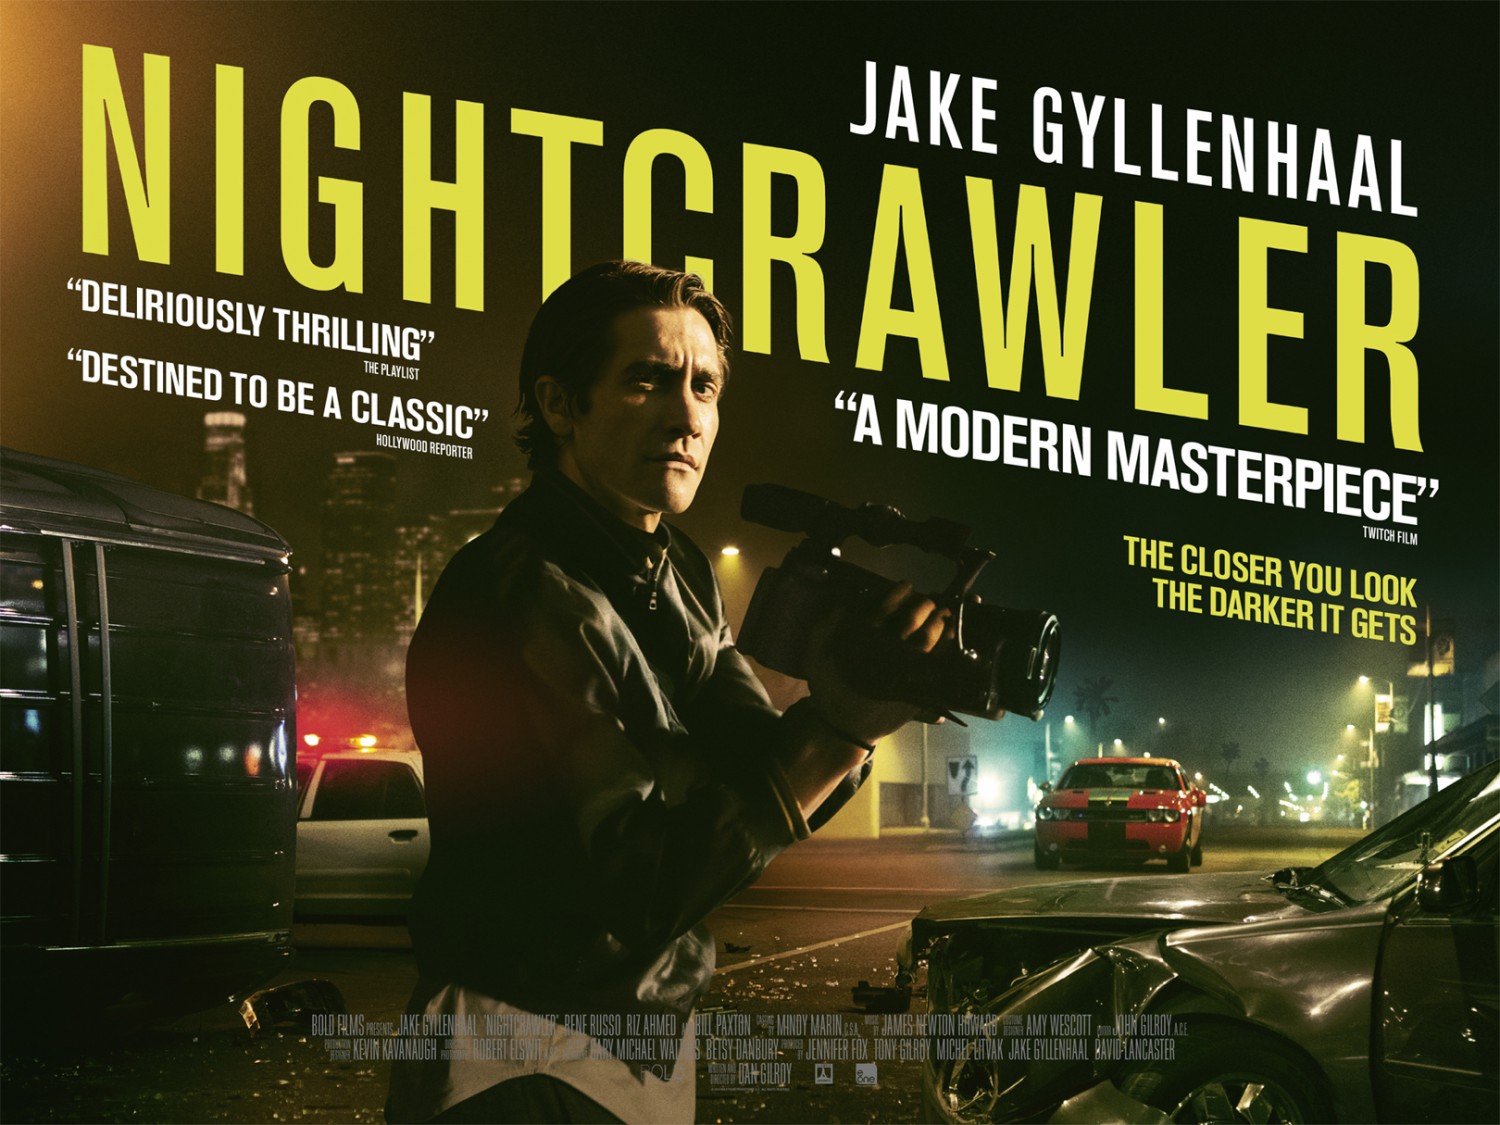 Road to Cinema Goes Inside Oscar Nominated ‘Nightcrawler’ with Screenwriter and Director Dan Gilroy